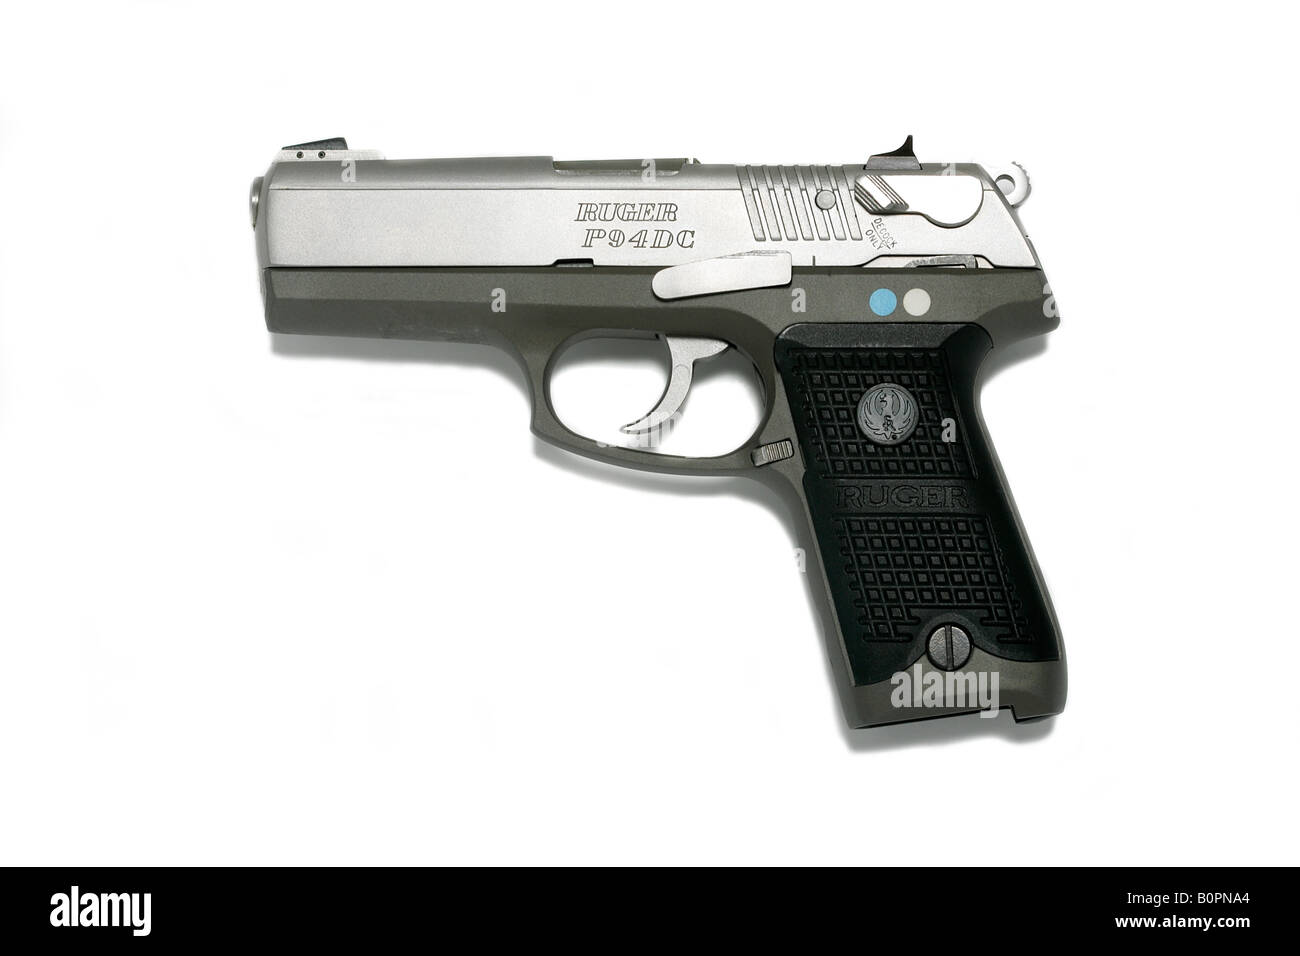 Ruger P 94 DC Hand Gun Handgun Pistol Stock Photo